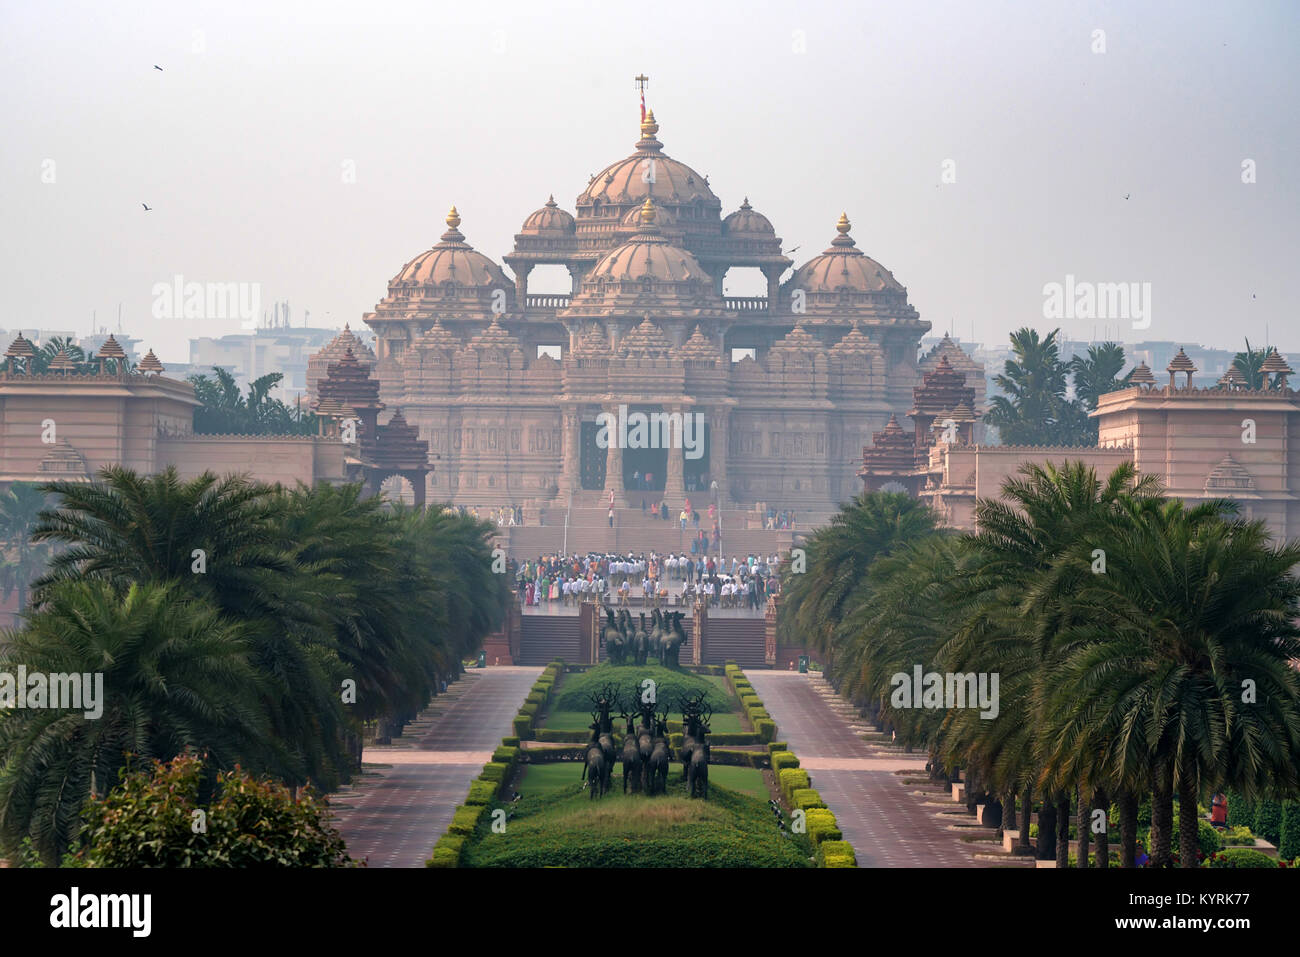 Facade of a temple Akshardham in Delhi, India Stock Photo